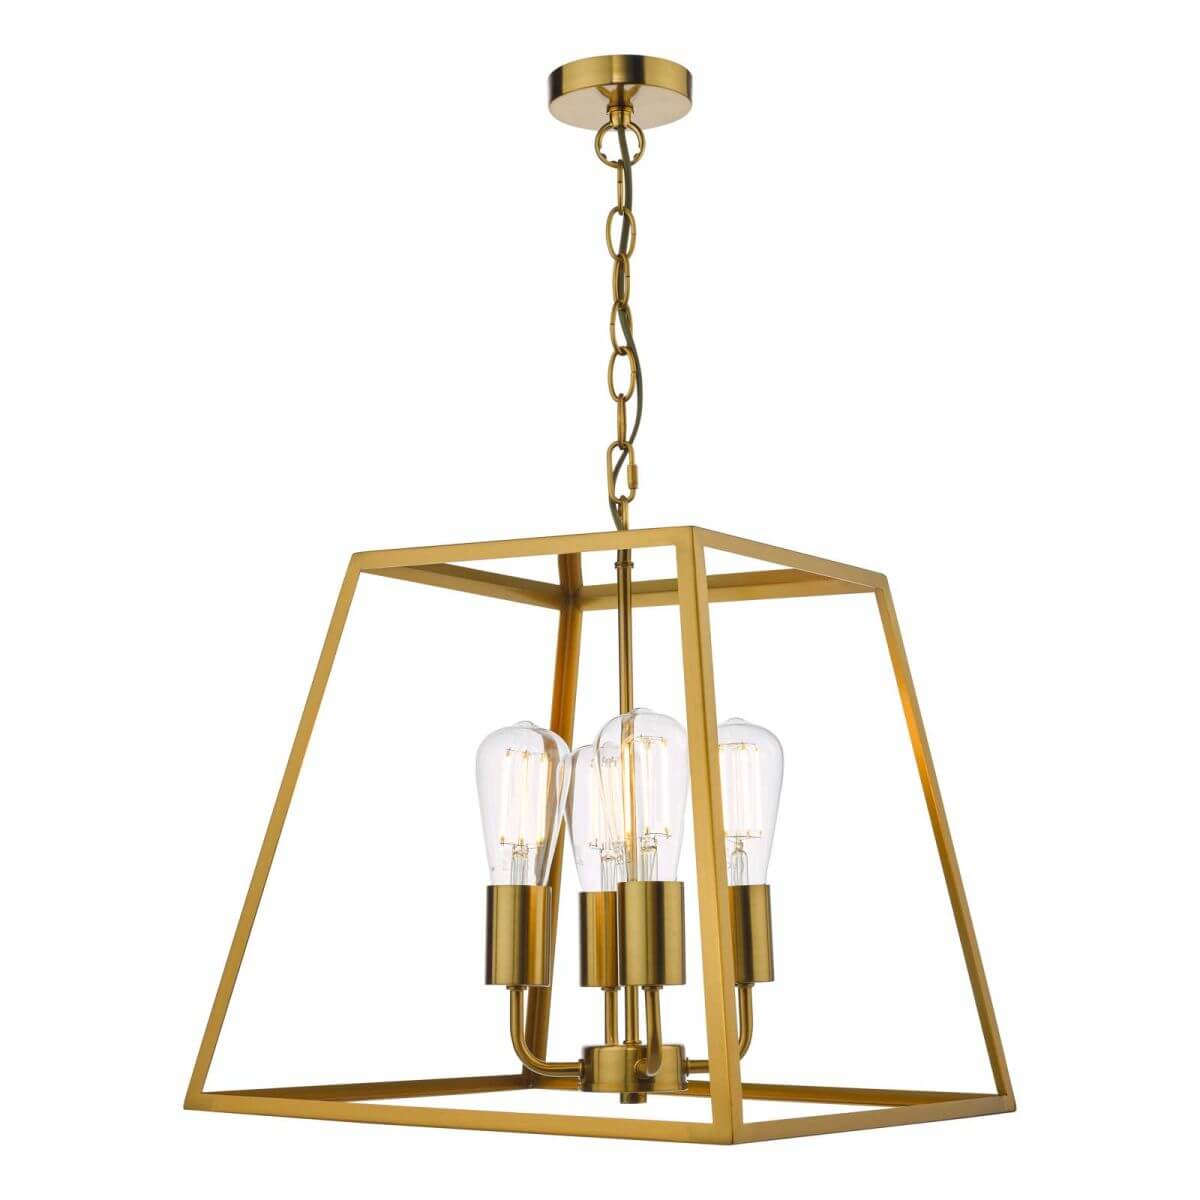 Showing image for Zinc 4-lamp lantern - natural brass